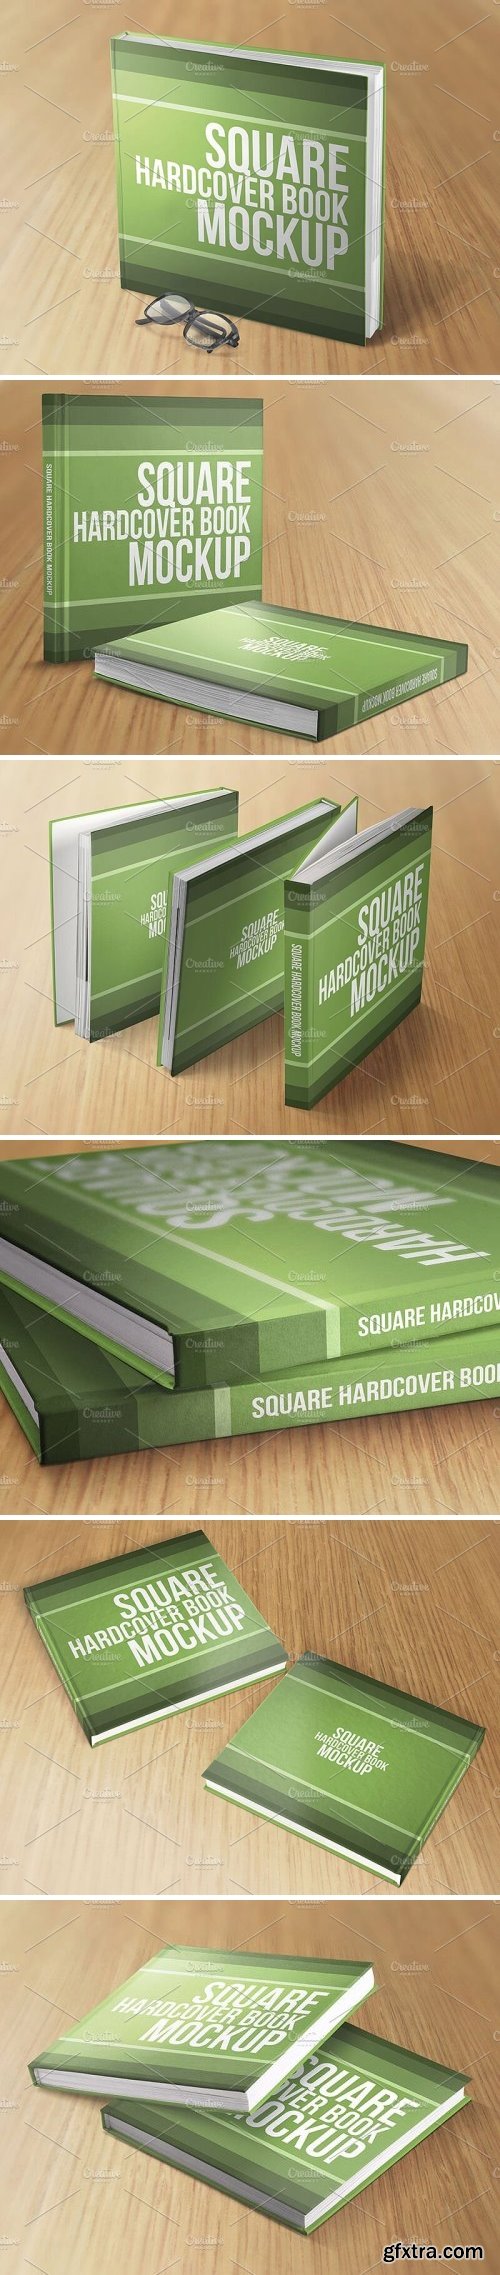 CM - Square Hardcover Book Mockups 1590879